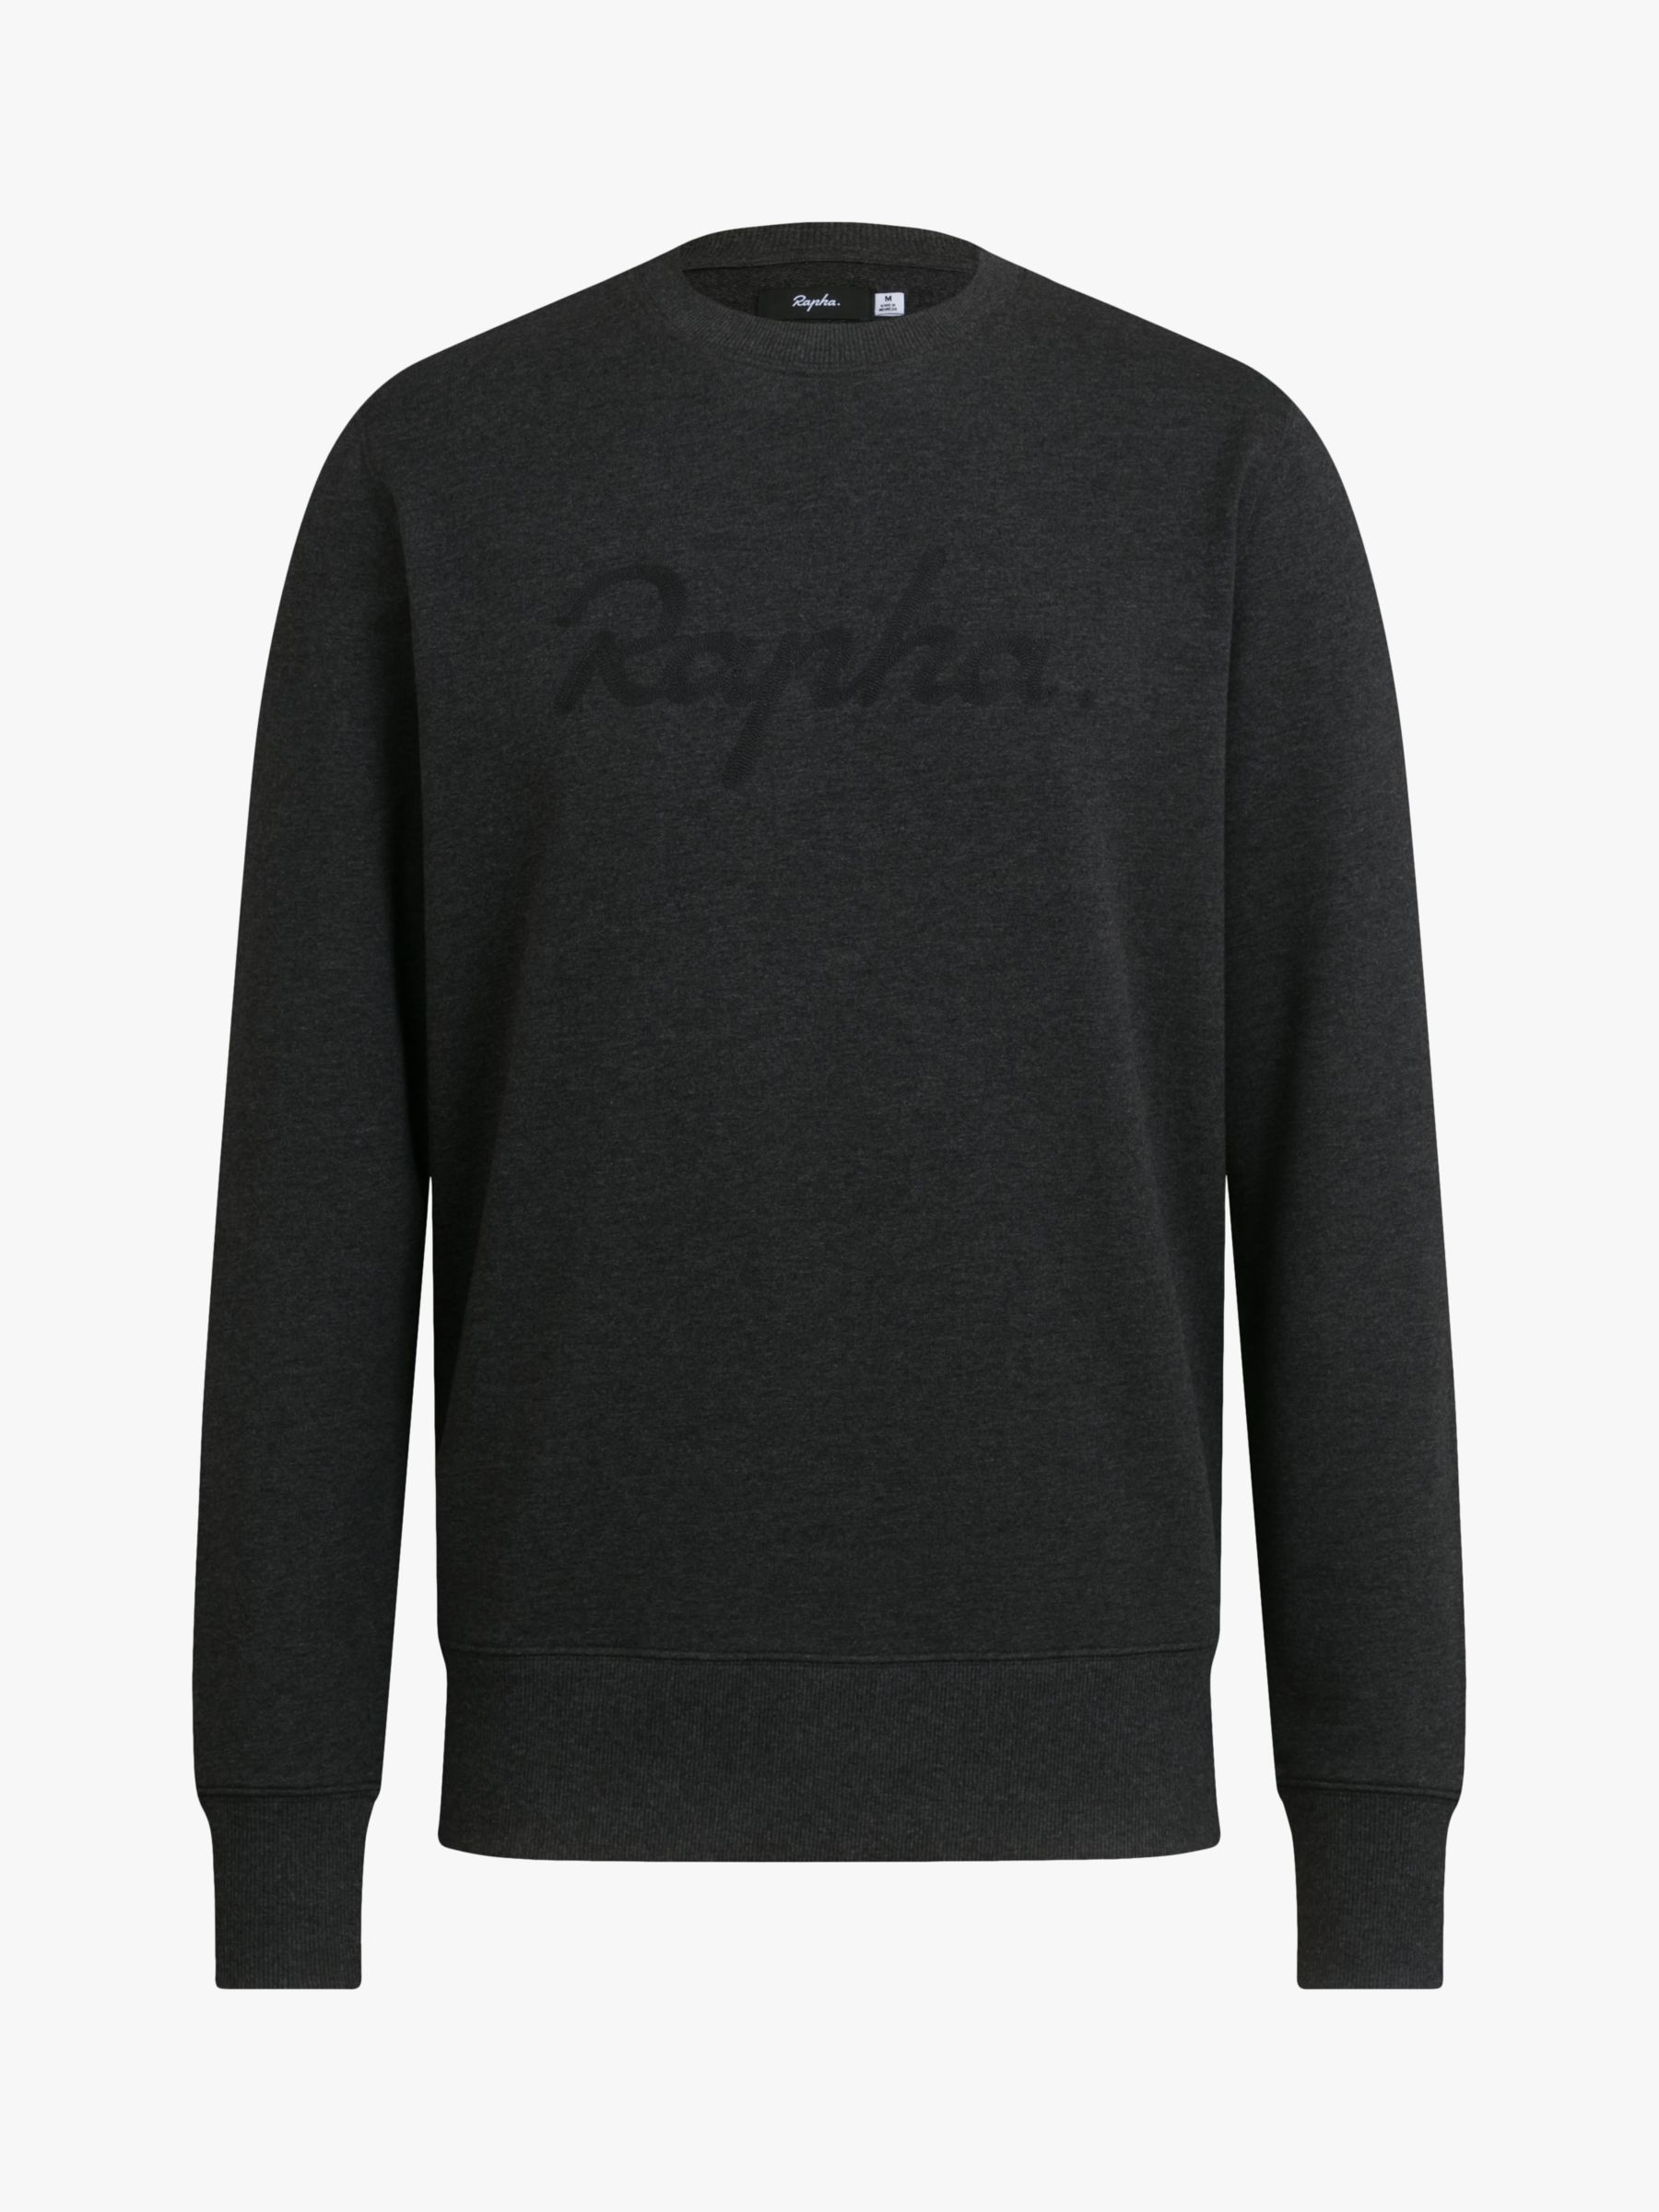 Rapha Chain Stitched Logo Sweatshirt, Black/White at John Lewis